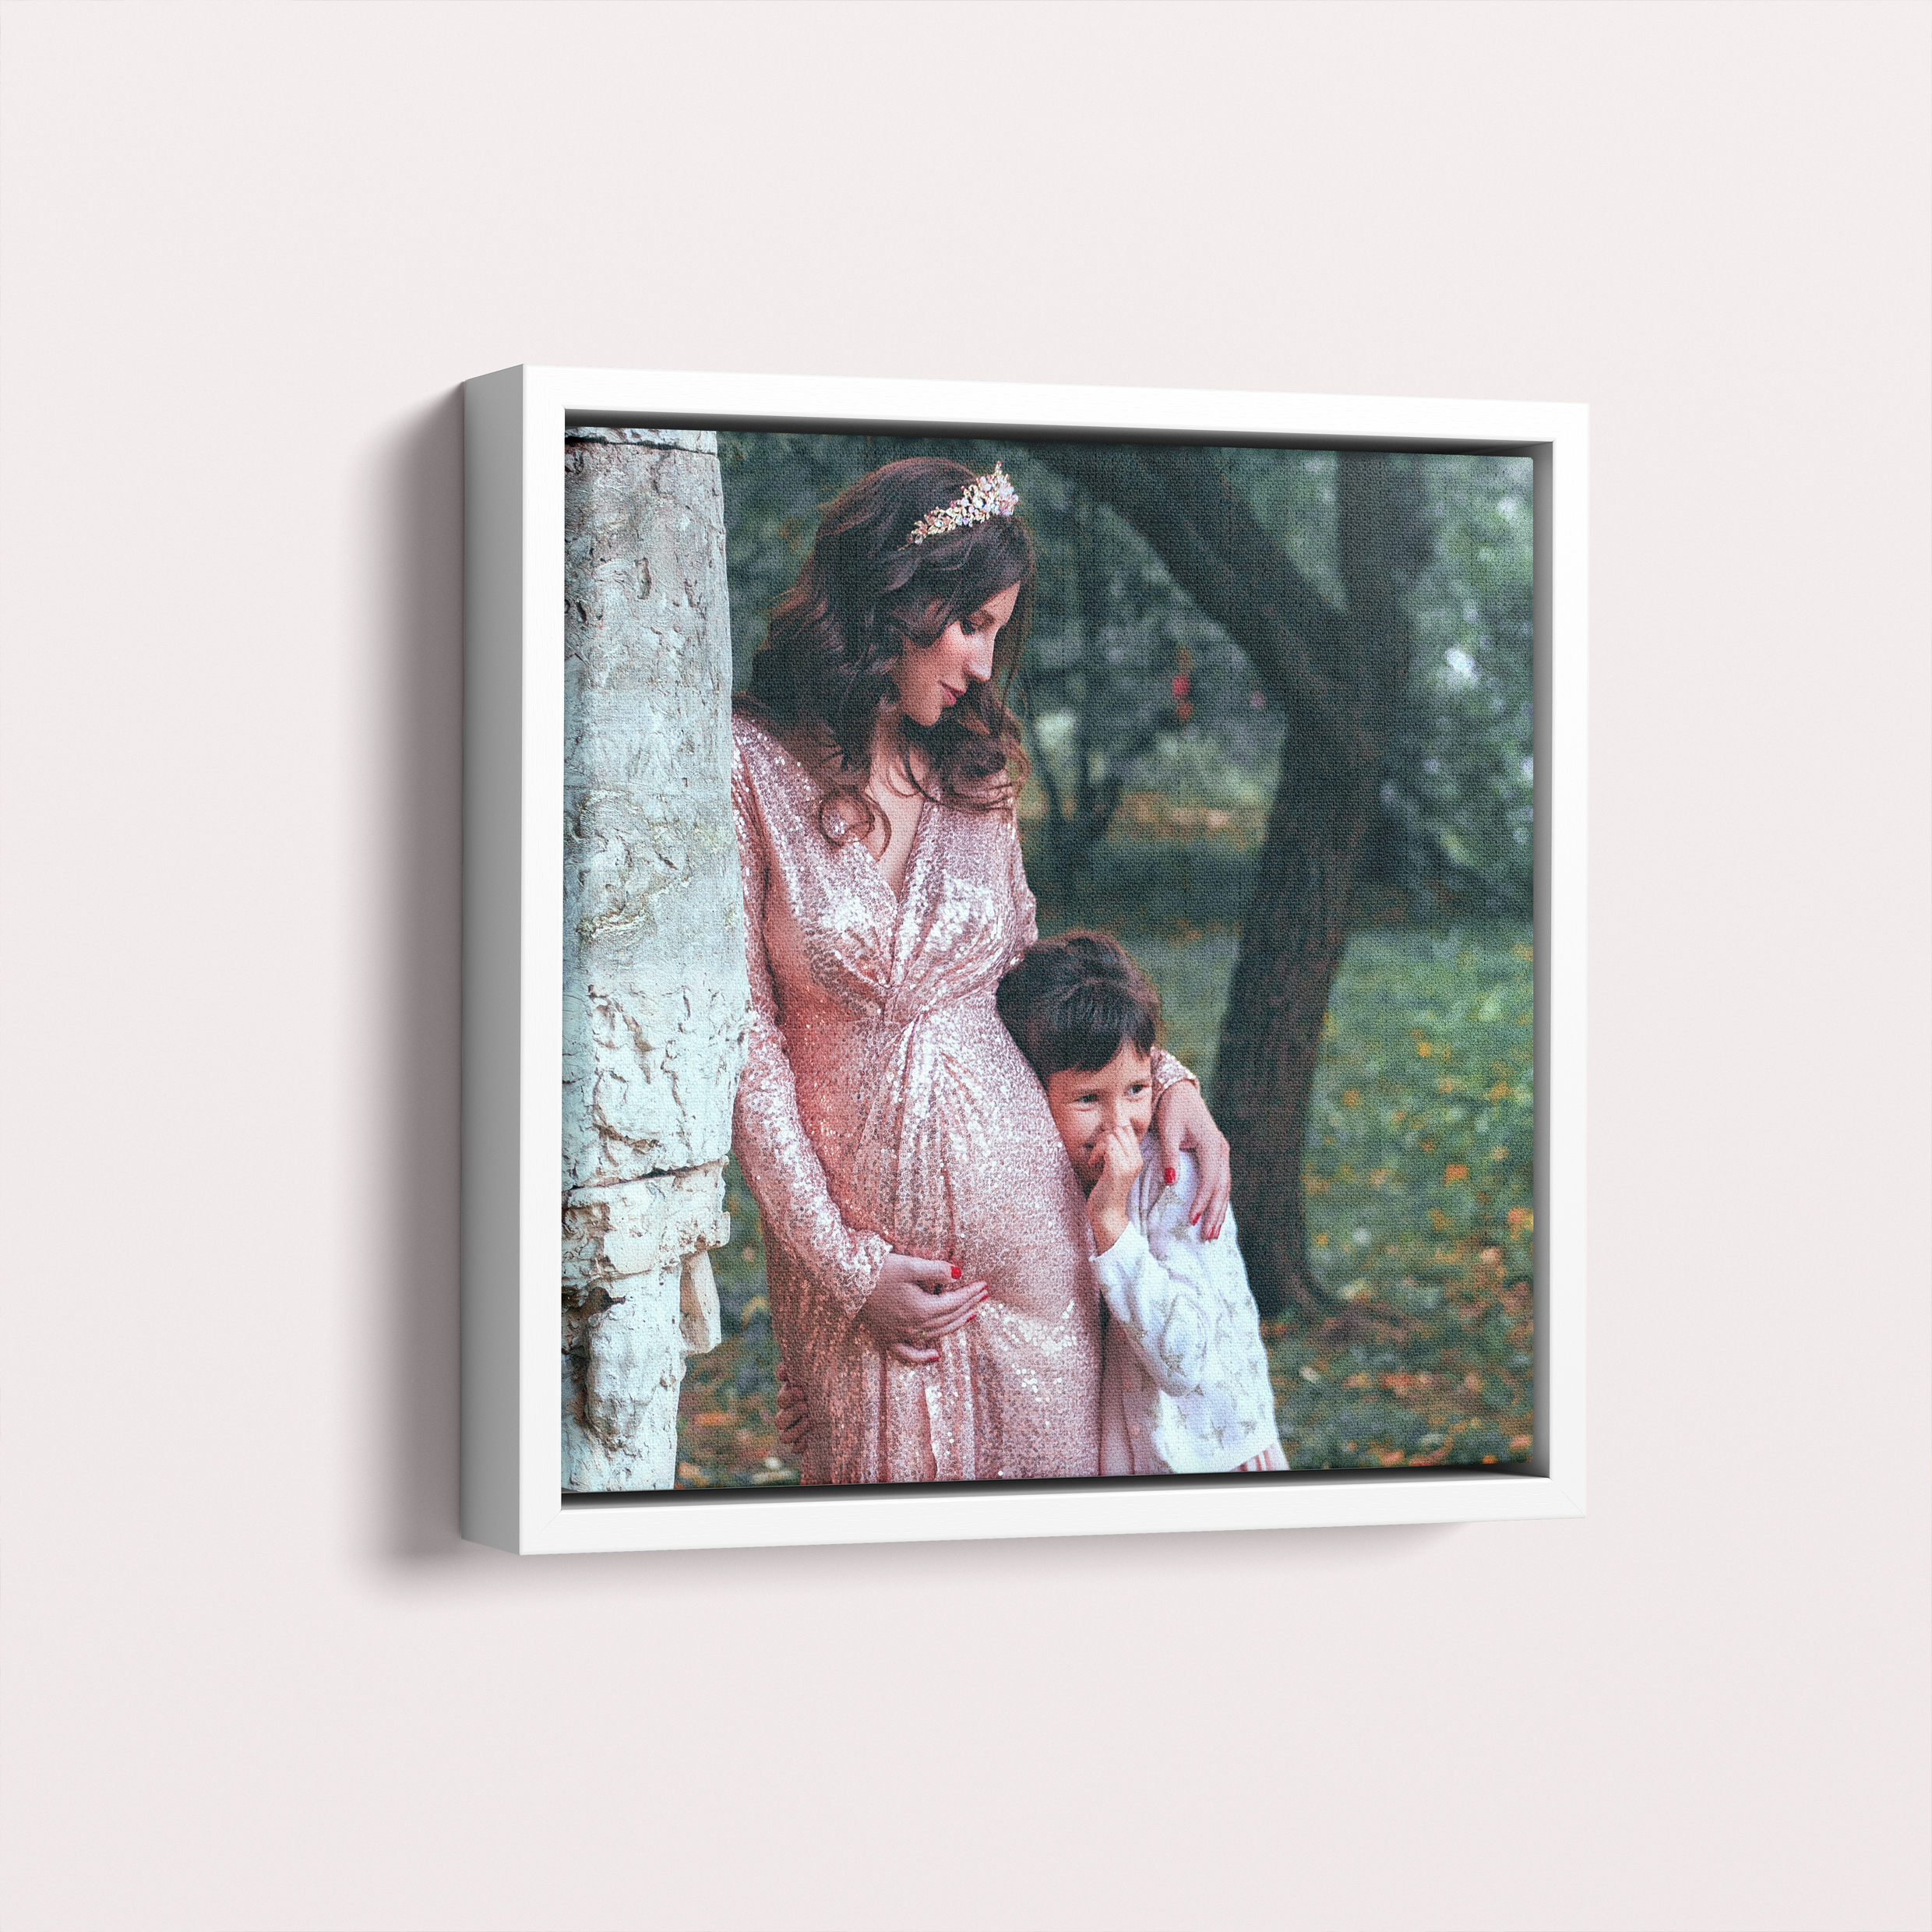 Motherhood Magic Framed Photo Canvas - Capture the Joy with One Precious Photo